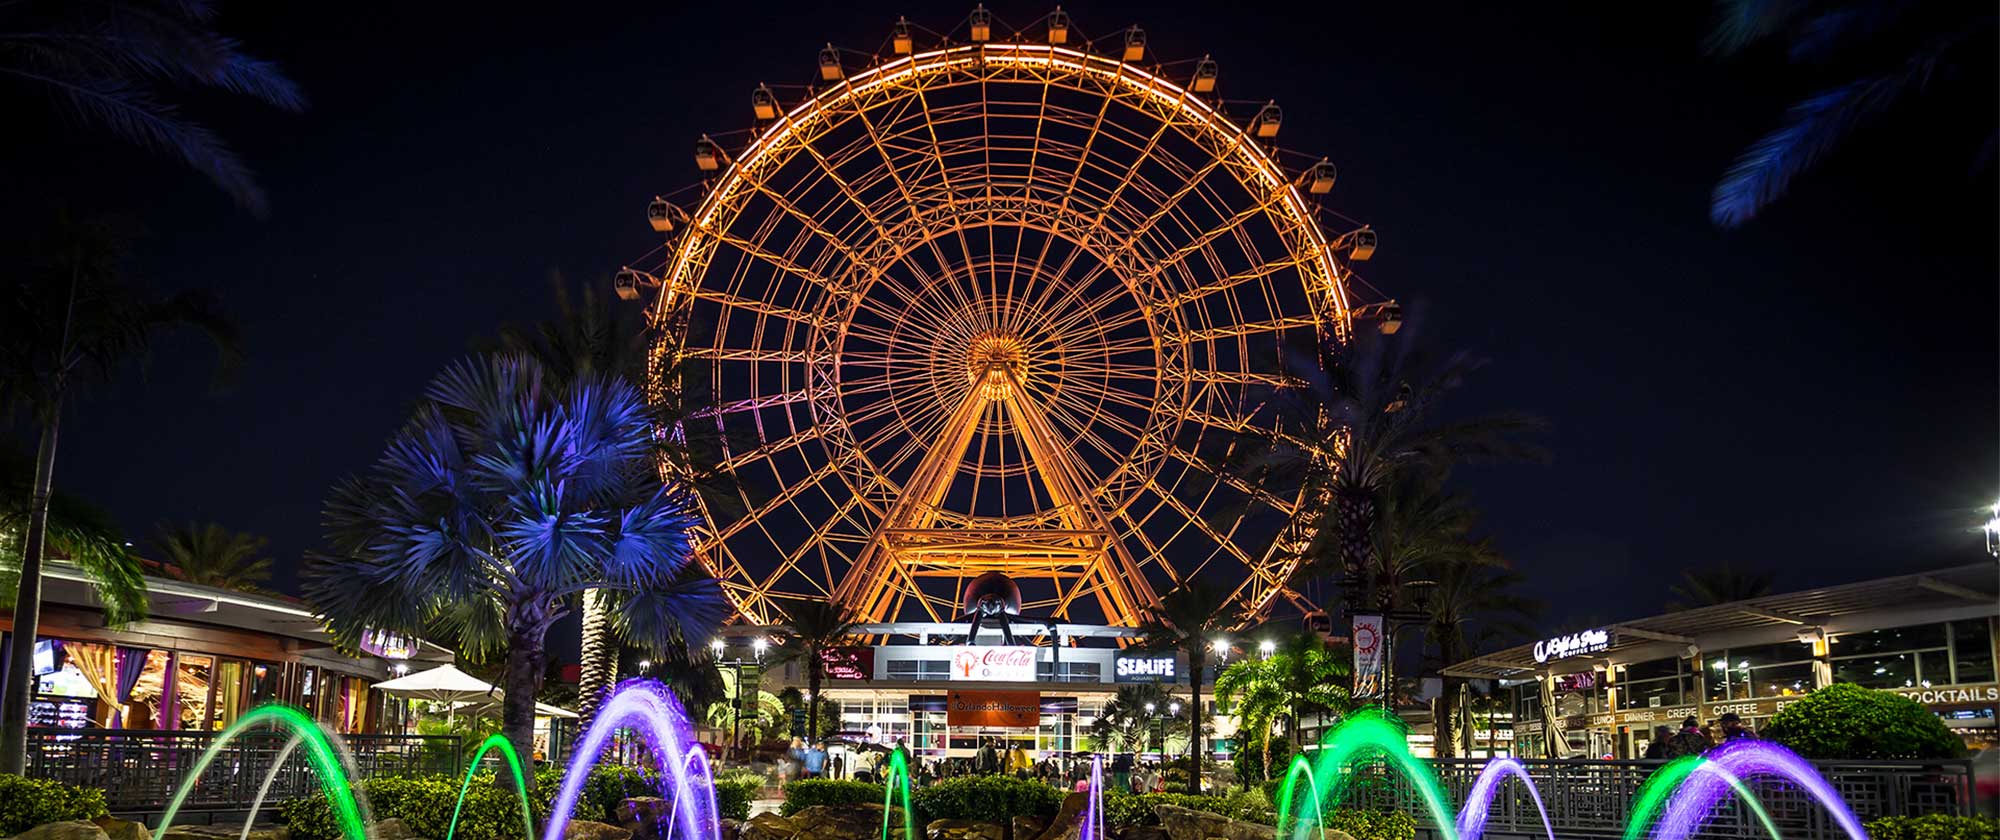 ICON Park ferris wheel in Orlando FL